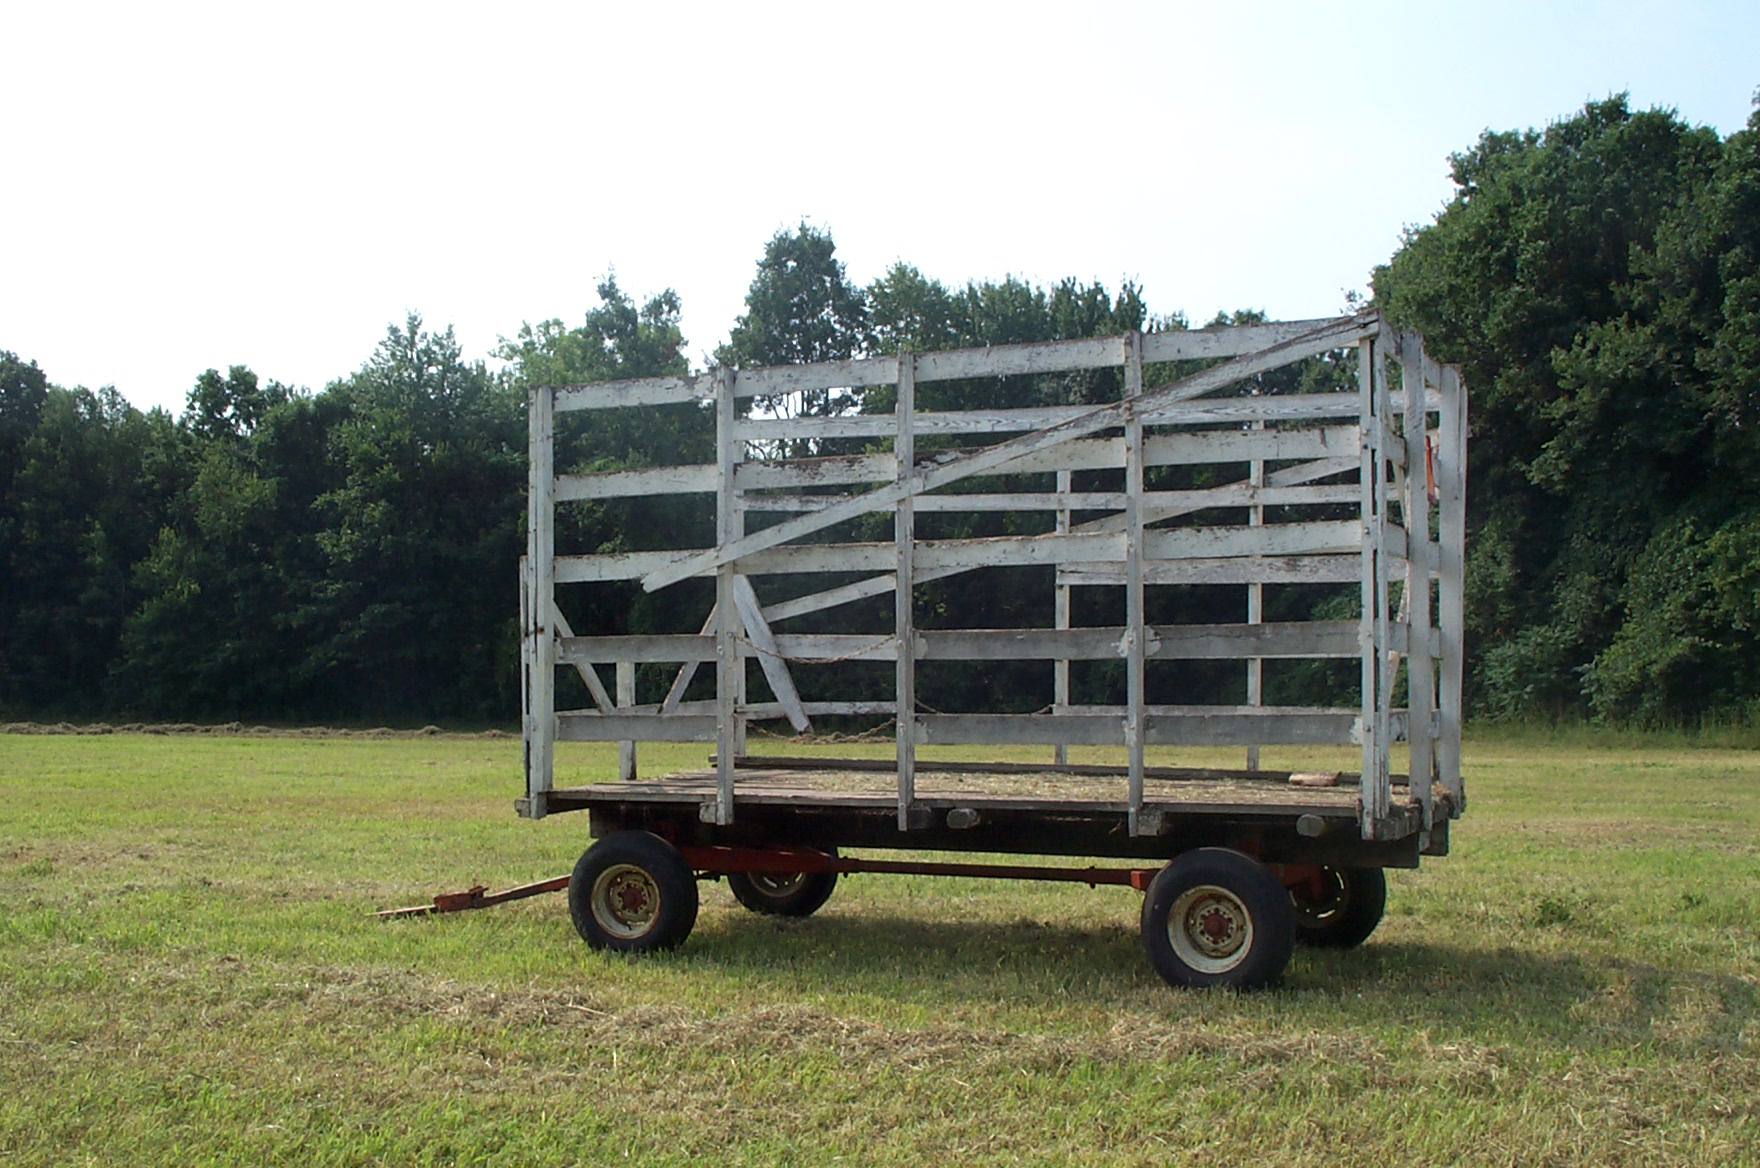 File:Hay wagon.jpg - Wikimedia Commons